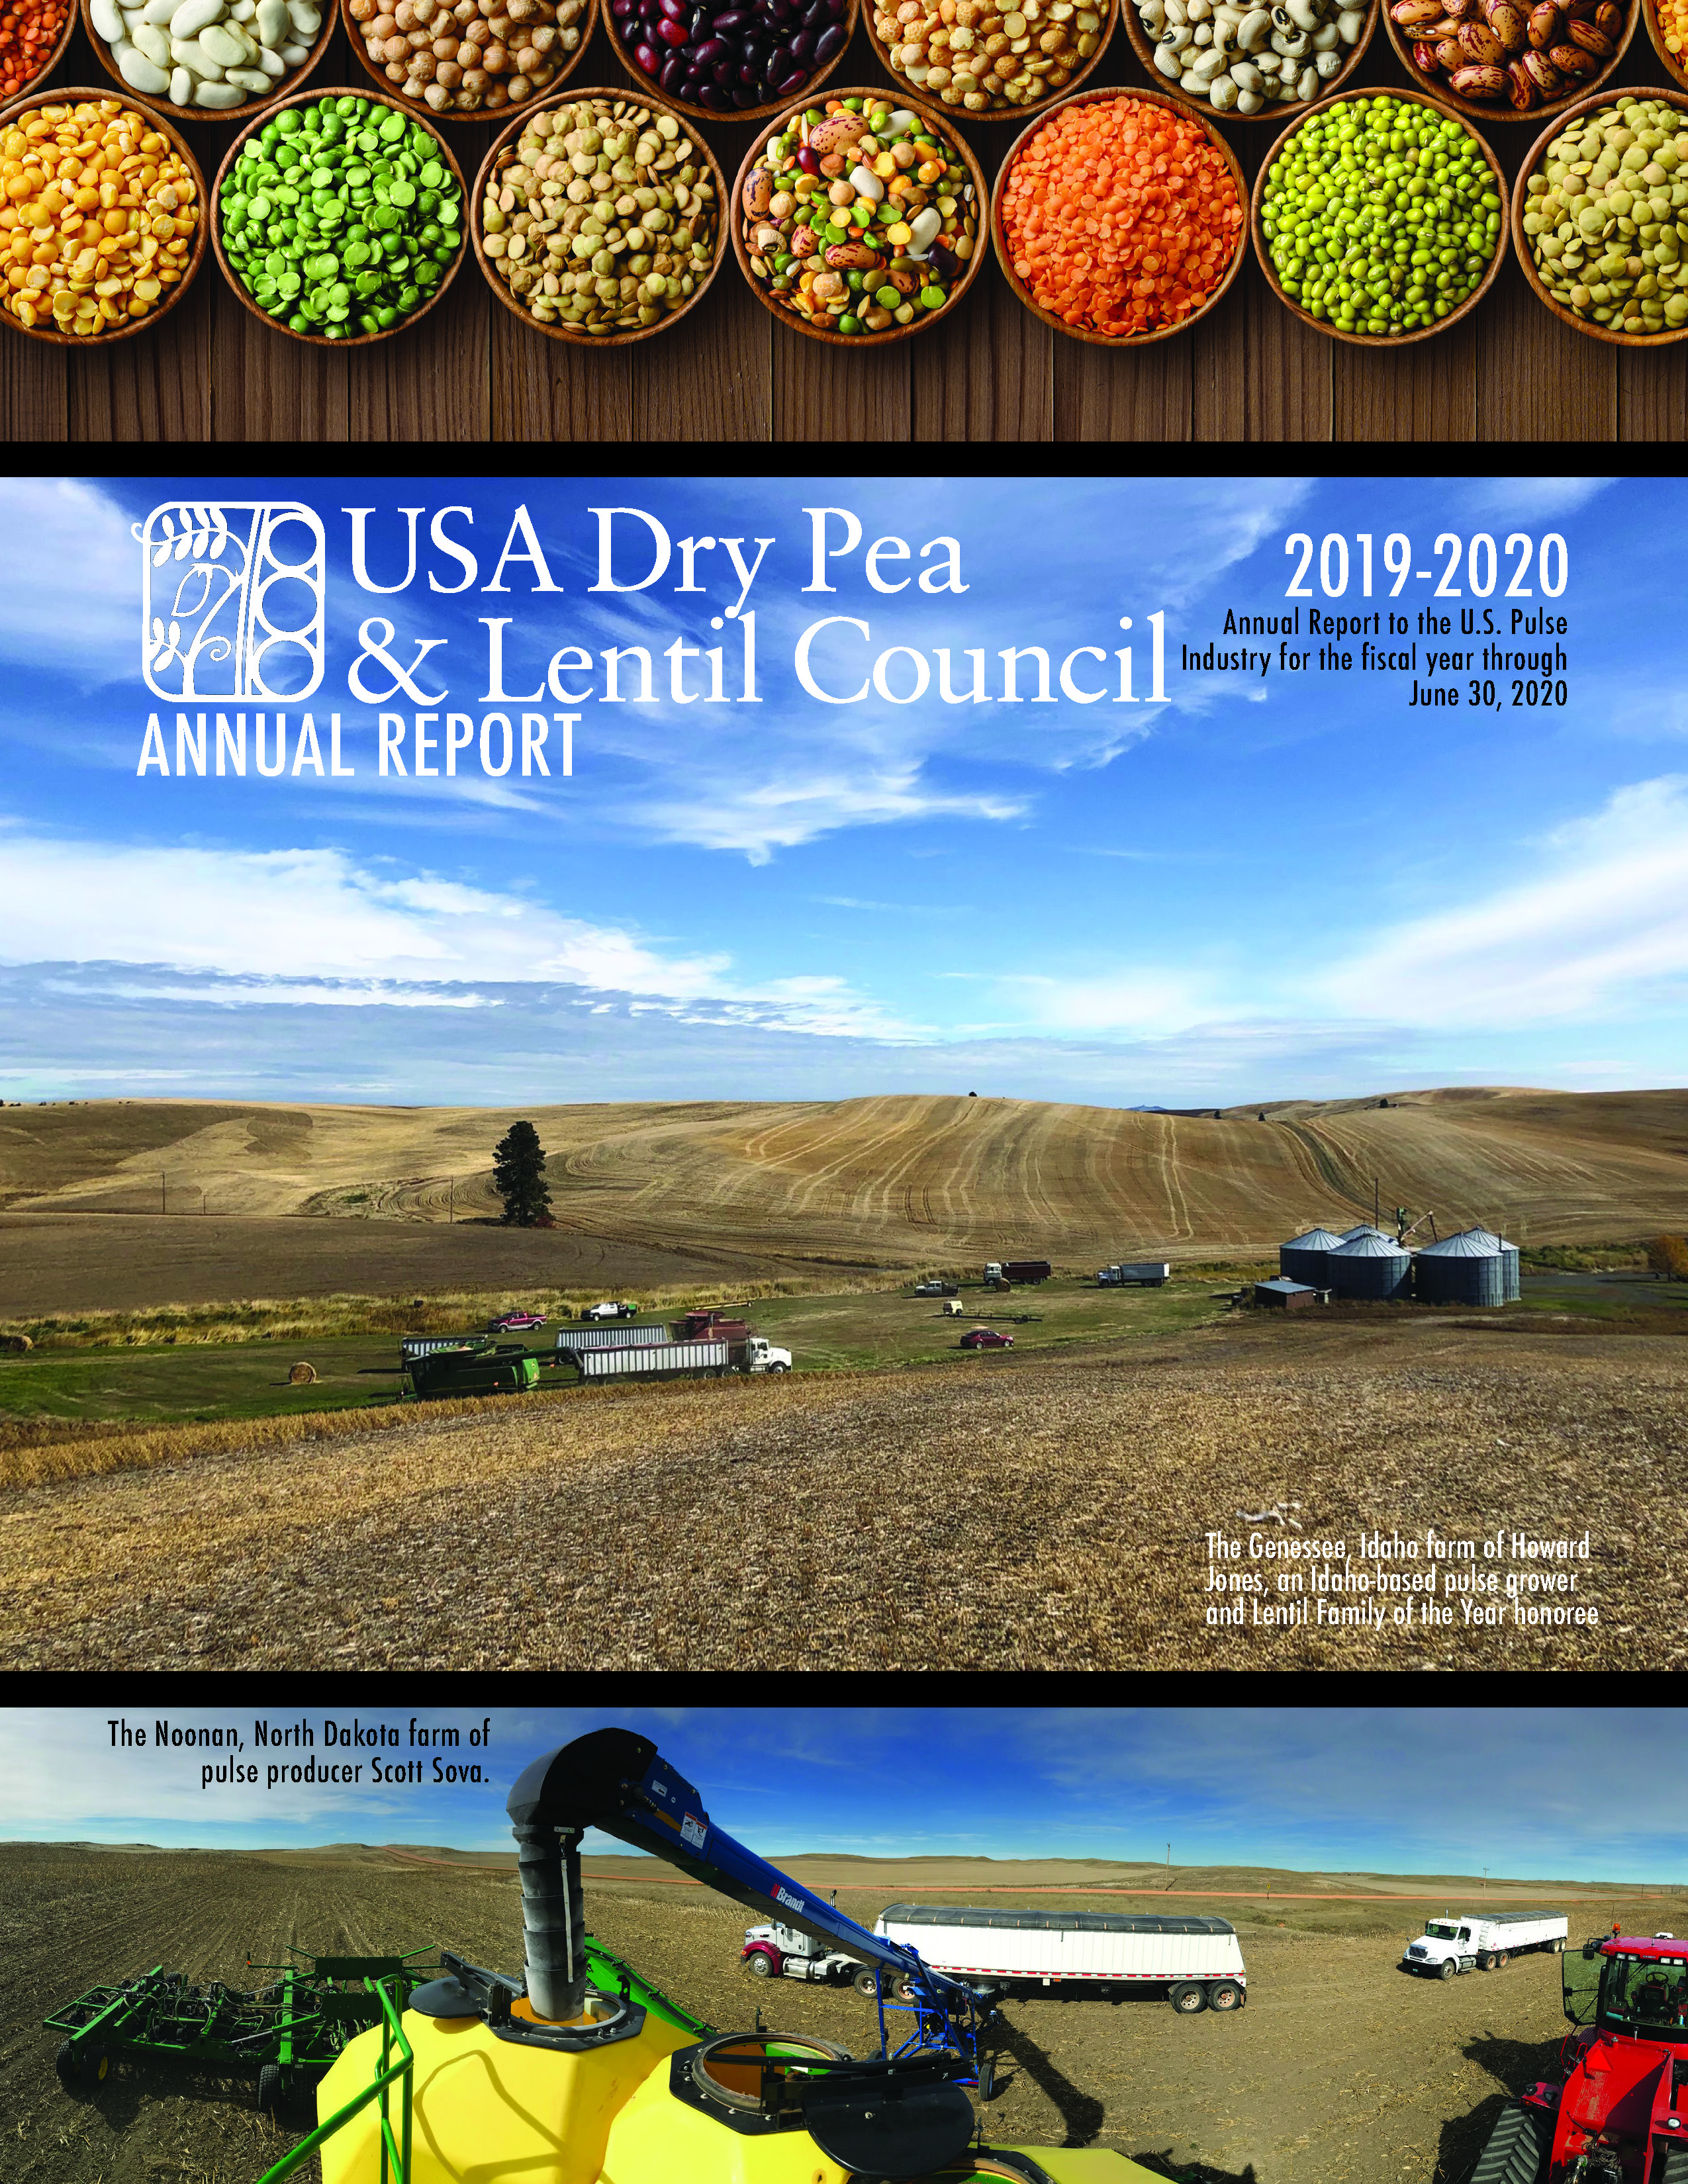 2019/20 Annual Report Cover